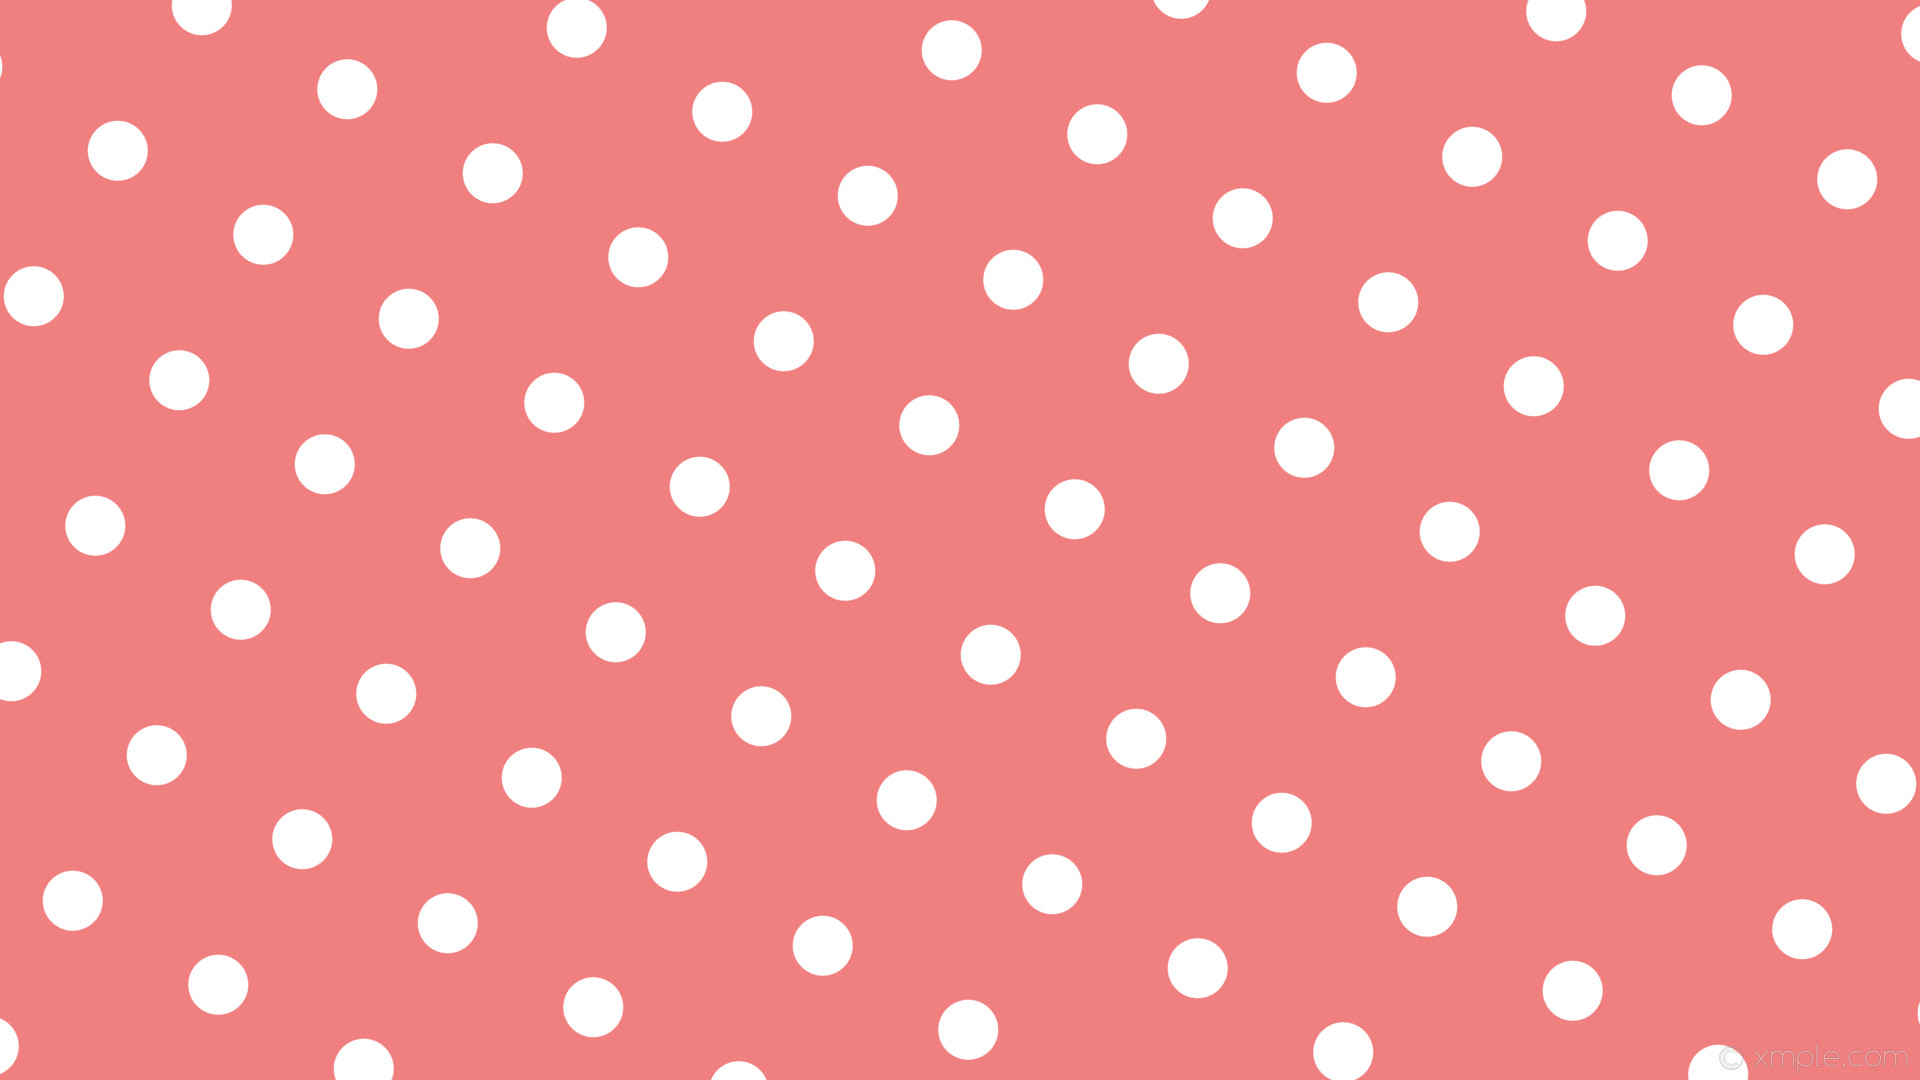 Images of polka dots